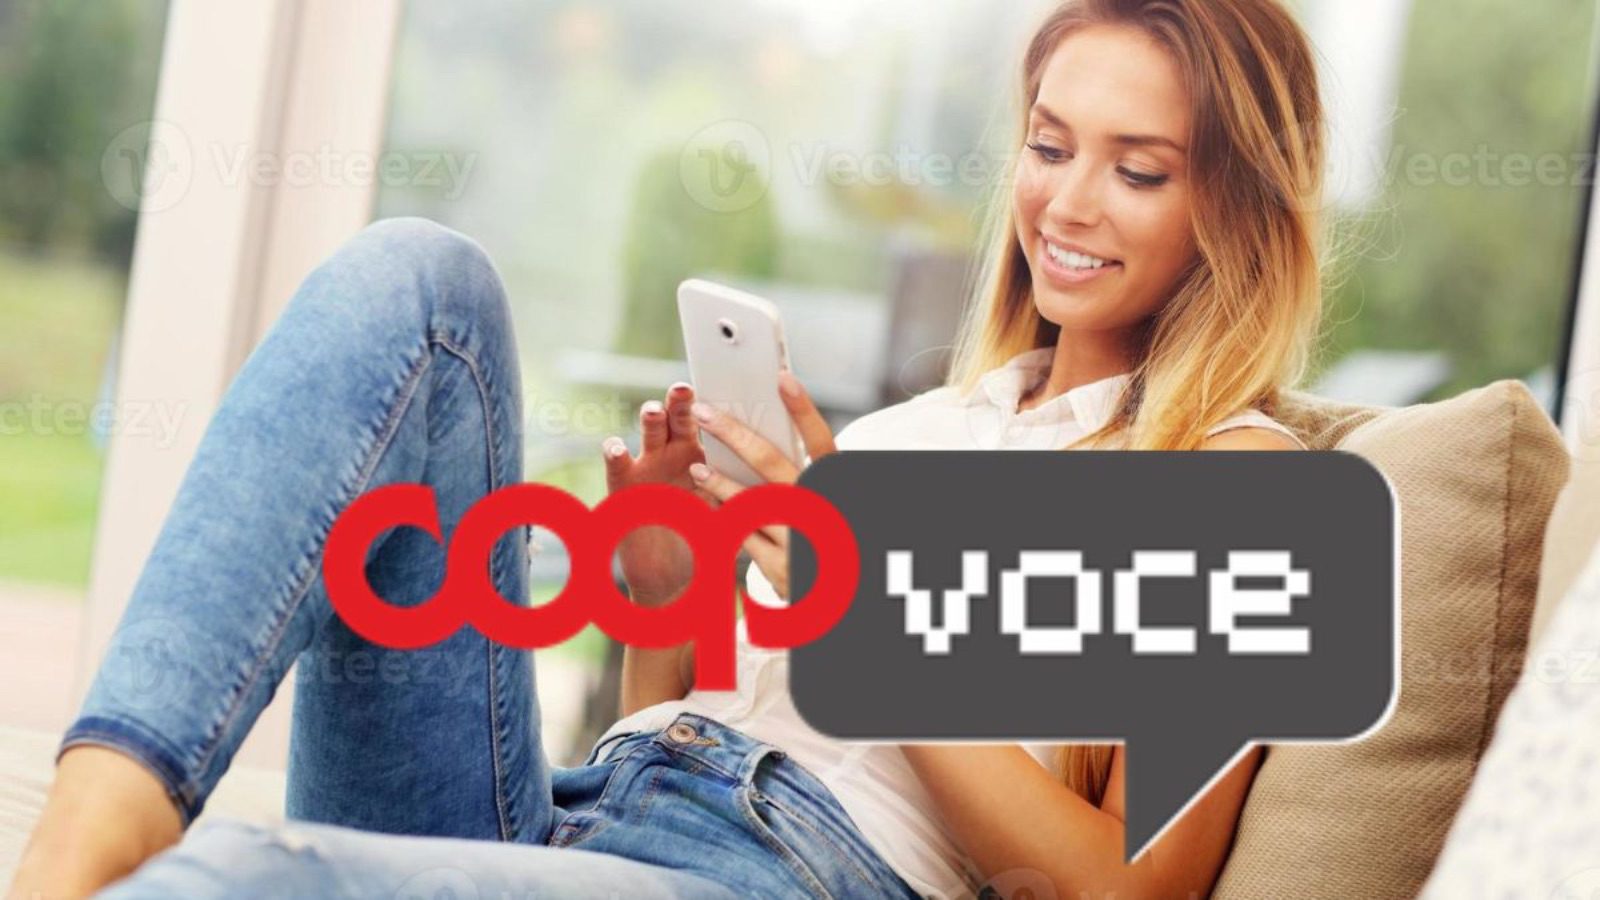 CoopVoce batte Vodafone, 180 giga al mese quasi gratis